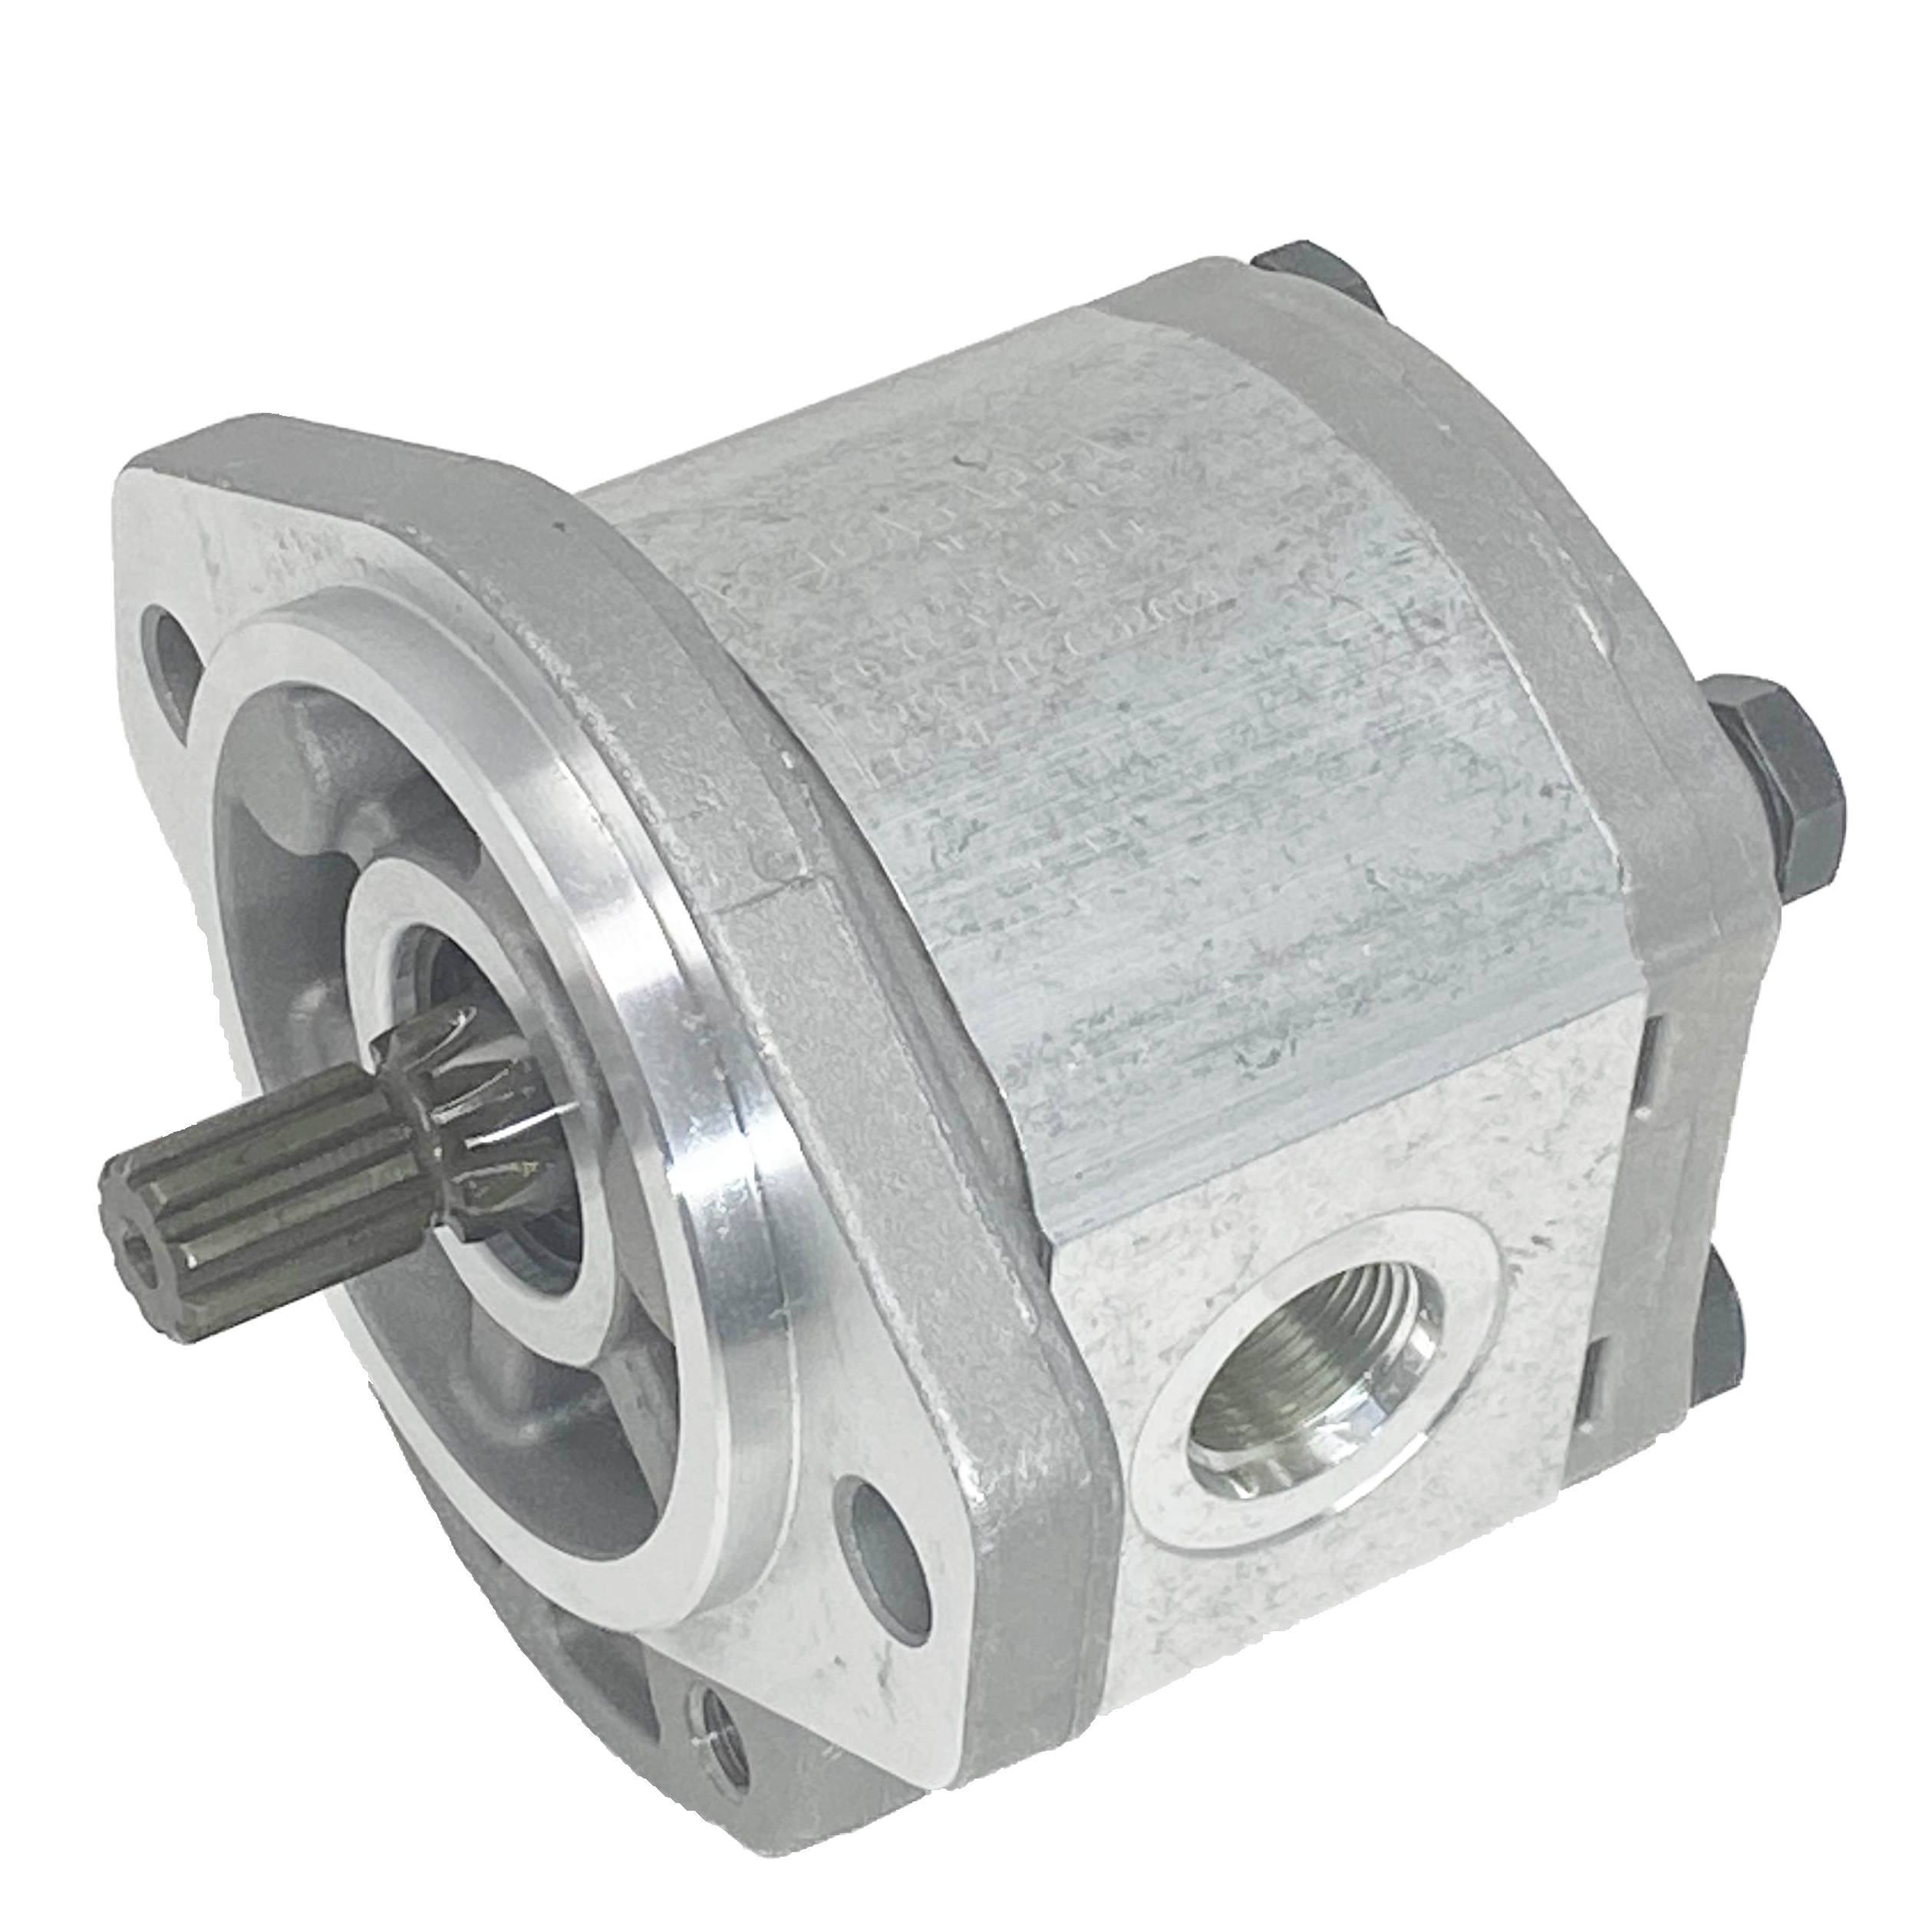 PLM20.8R0-07S1-LOC/OC-N-EL : Casappa Polaris Gear Motor, 8.26cc, 3625psi Rated, 3500RPM, Reversible Rear External Drain, 11T 16/32dp Shaft, SAE A 2-Bolt Flange, 0.625 (5/8") #10 SAE Inlet, 0.625 (5/8") #10 SAE Outlet, Aluminum Body & Flange